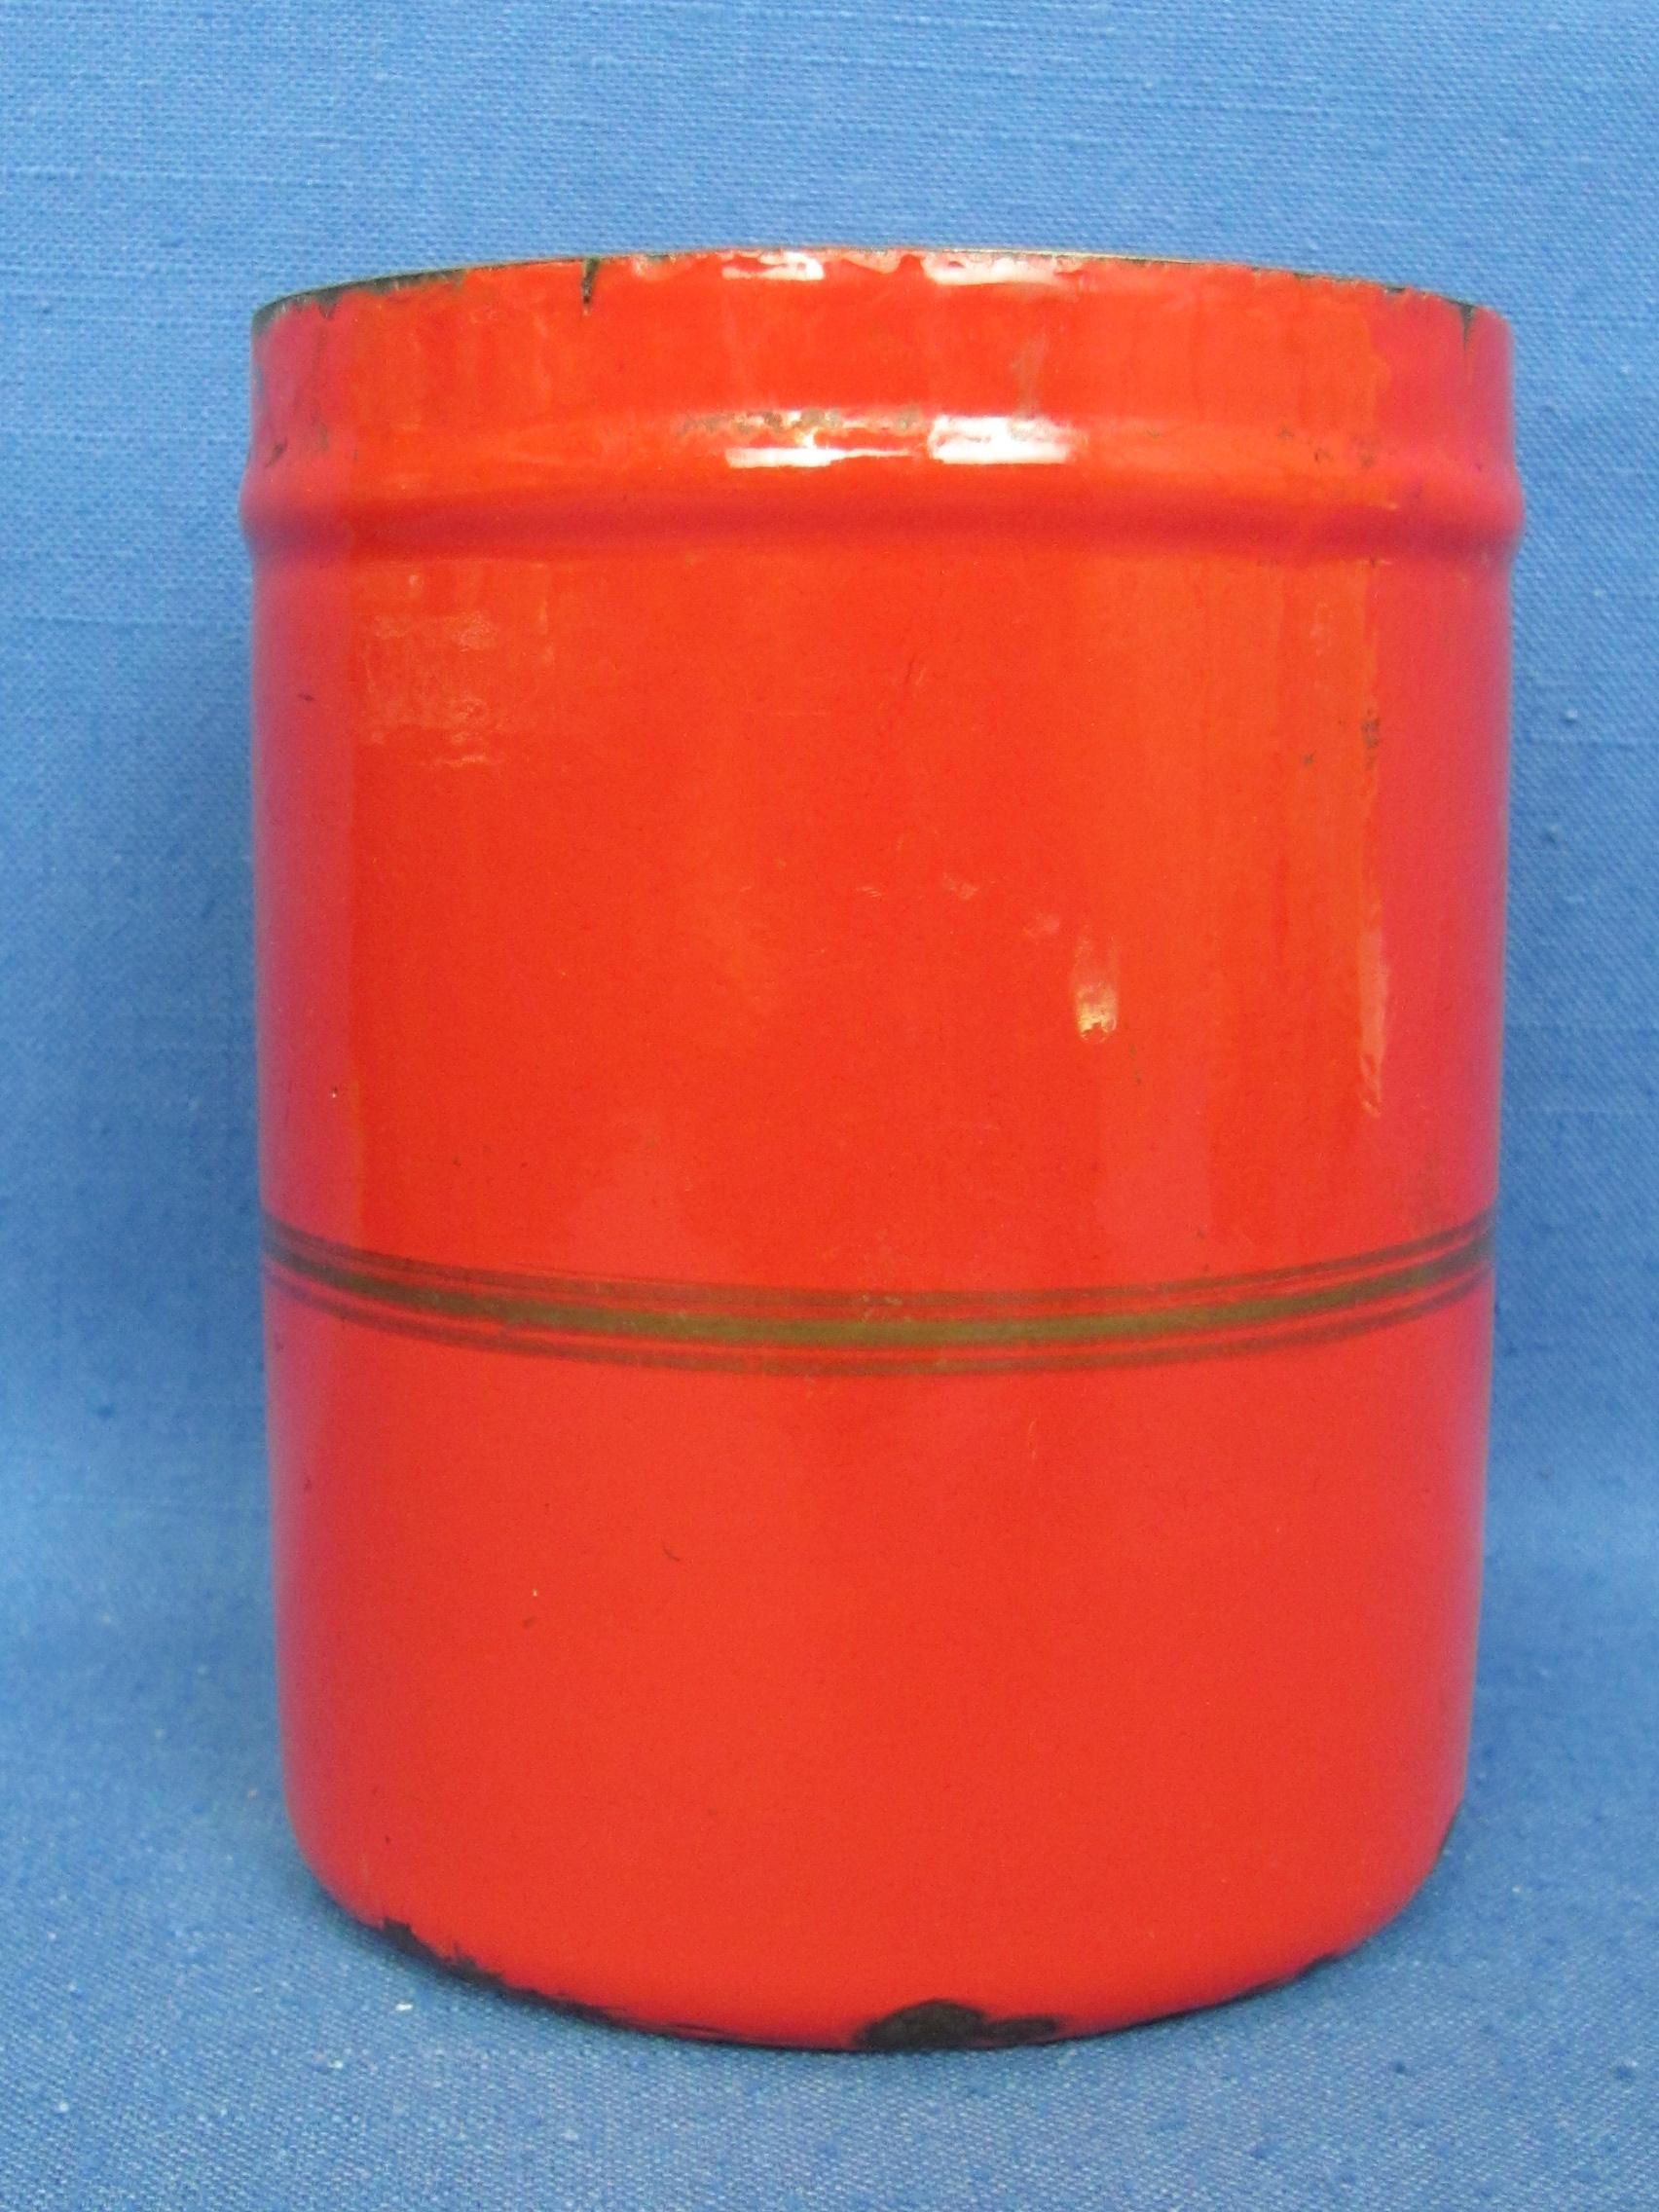 Red Porcelain Enamel Canister “Koffie” - No Lid – 5 1/2” tall – Some enamel loss & wear